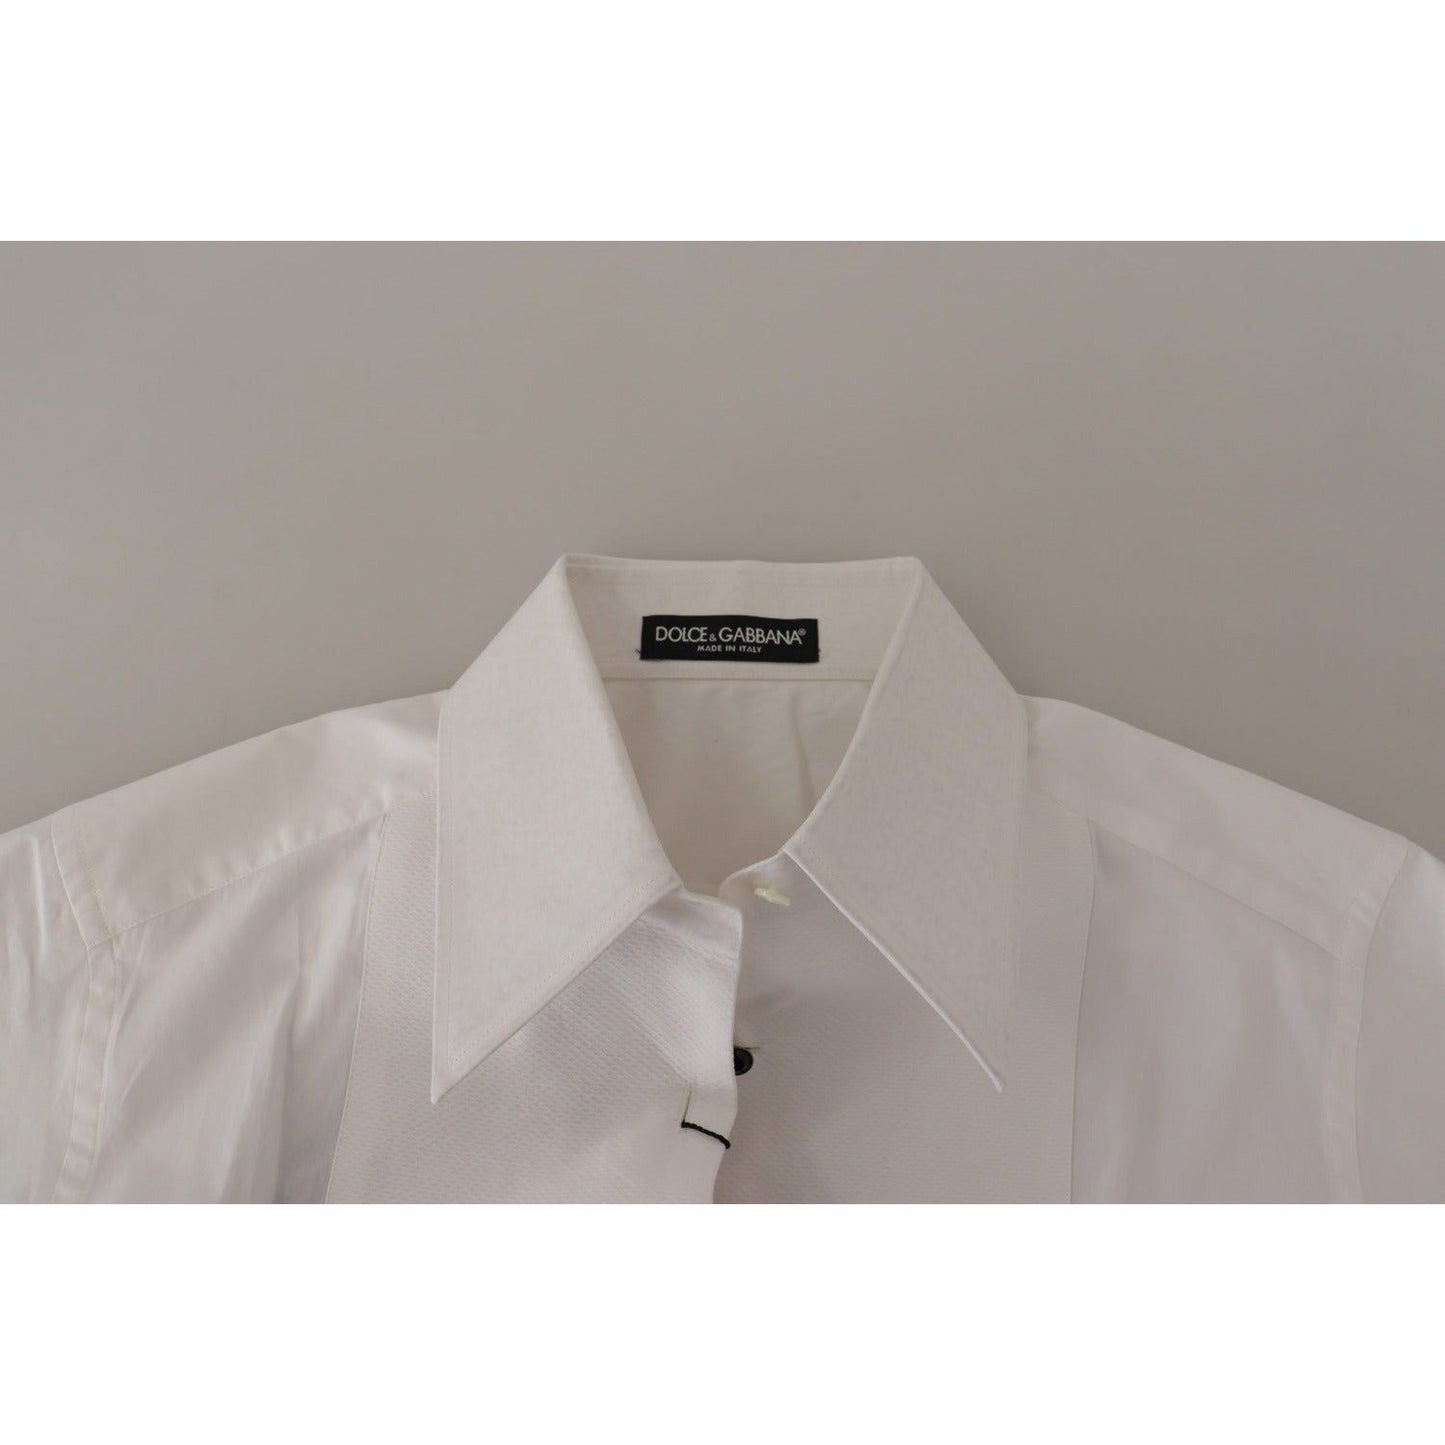 Dolce & Gabbana Elegant Sleeveless Tuxedo Blouse with Crystal Buttons white-sleeveless-tuxedo-formal-blouse-top